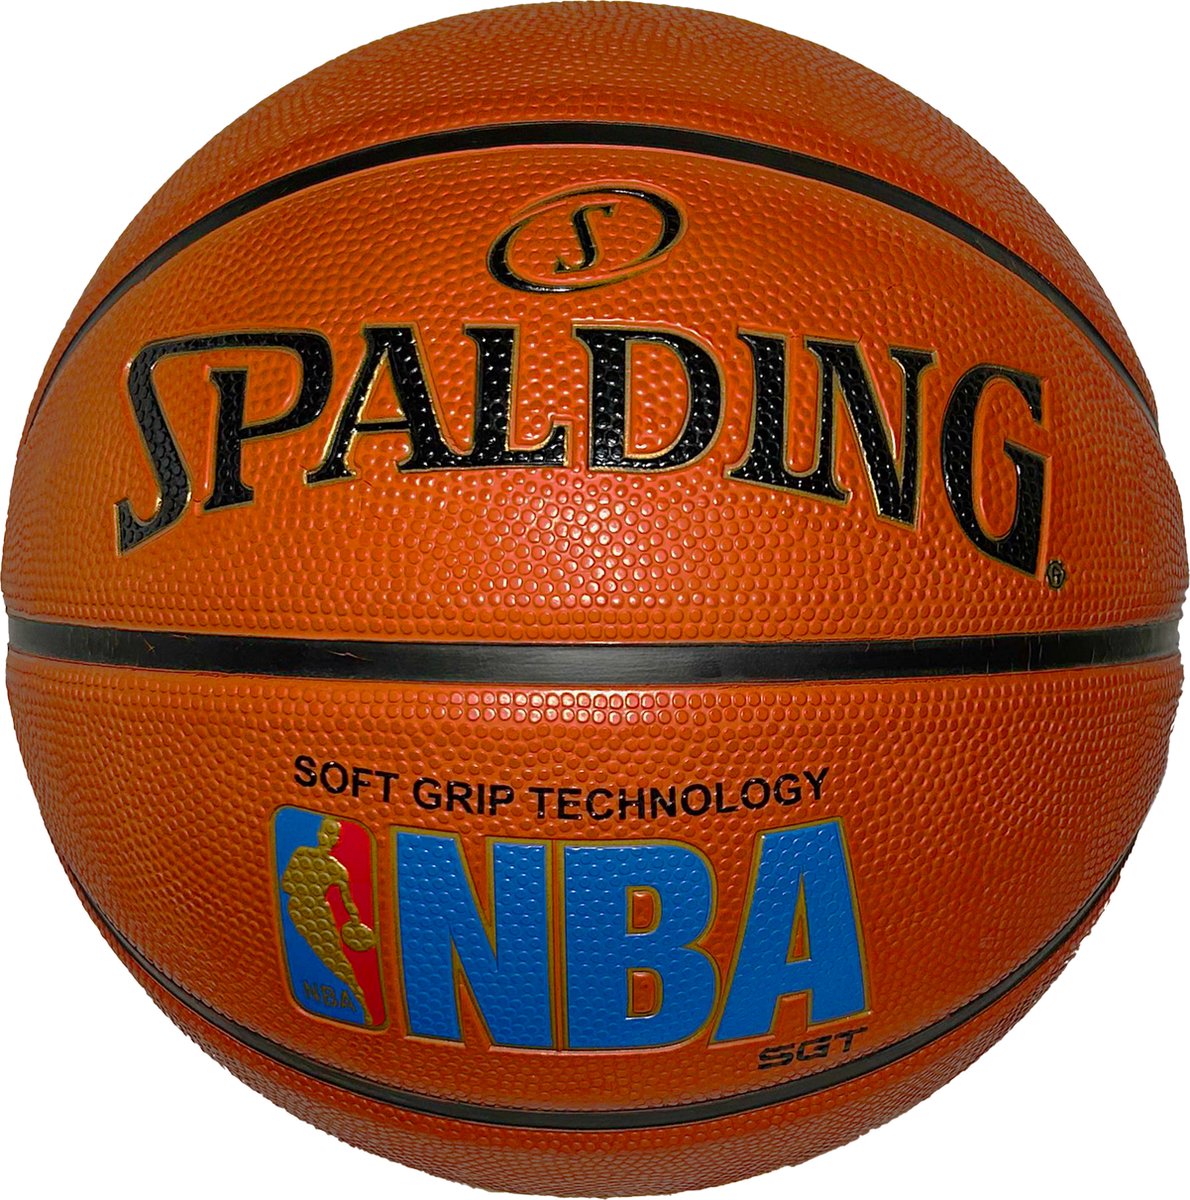 Spalding NBA Logoman Soft Grip Basketball - Oranje